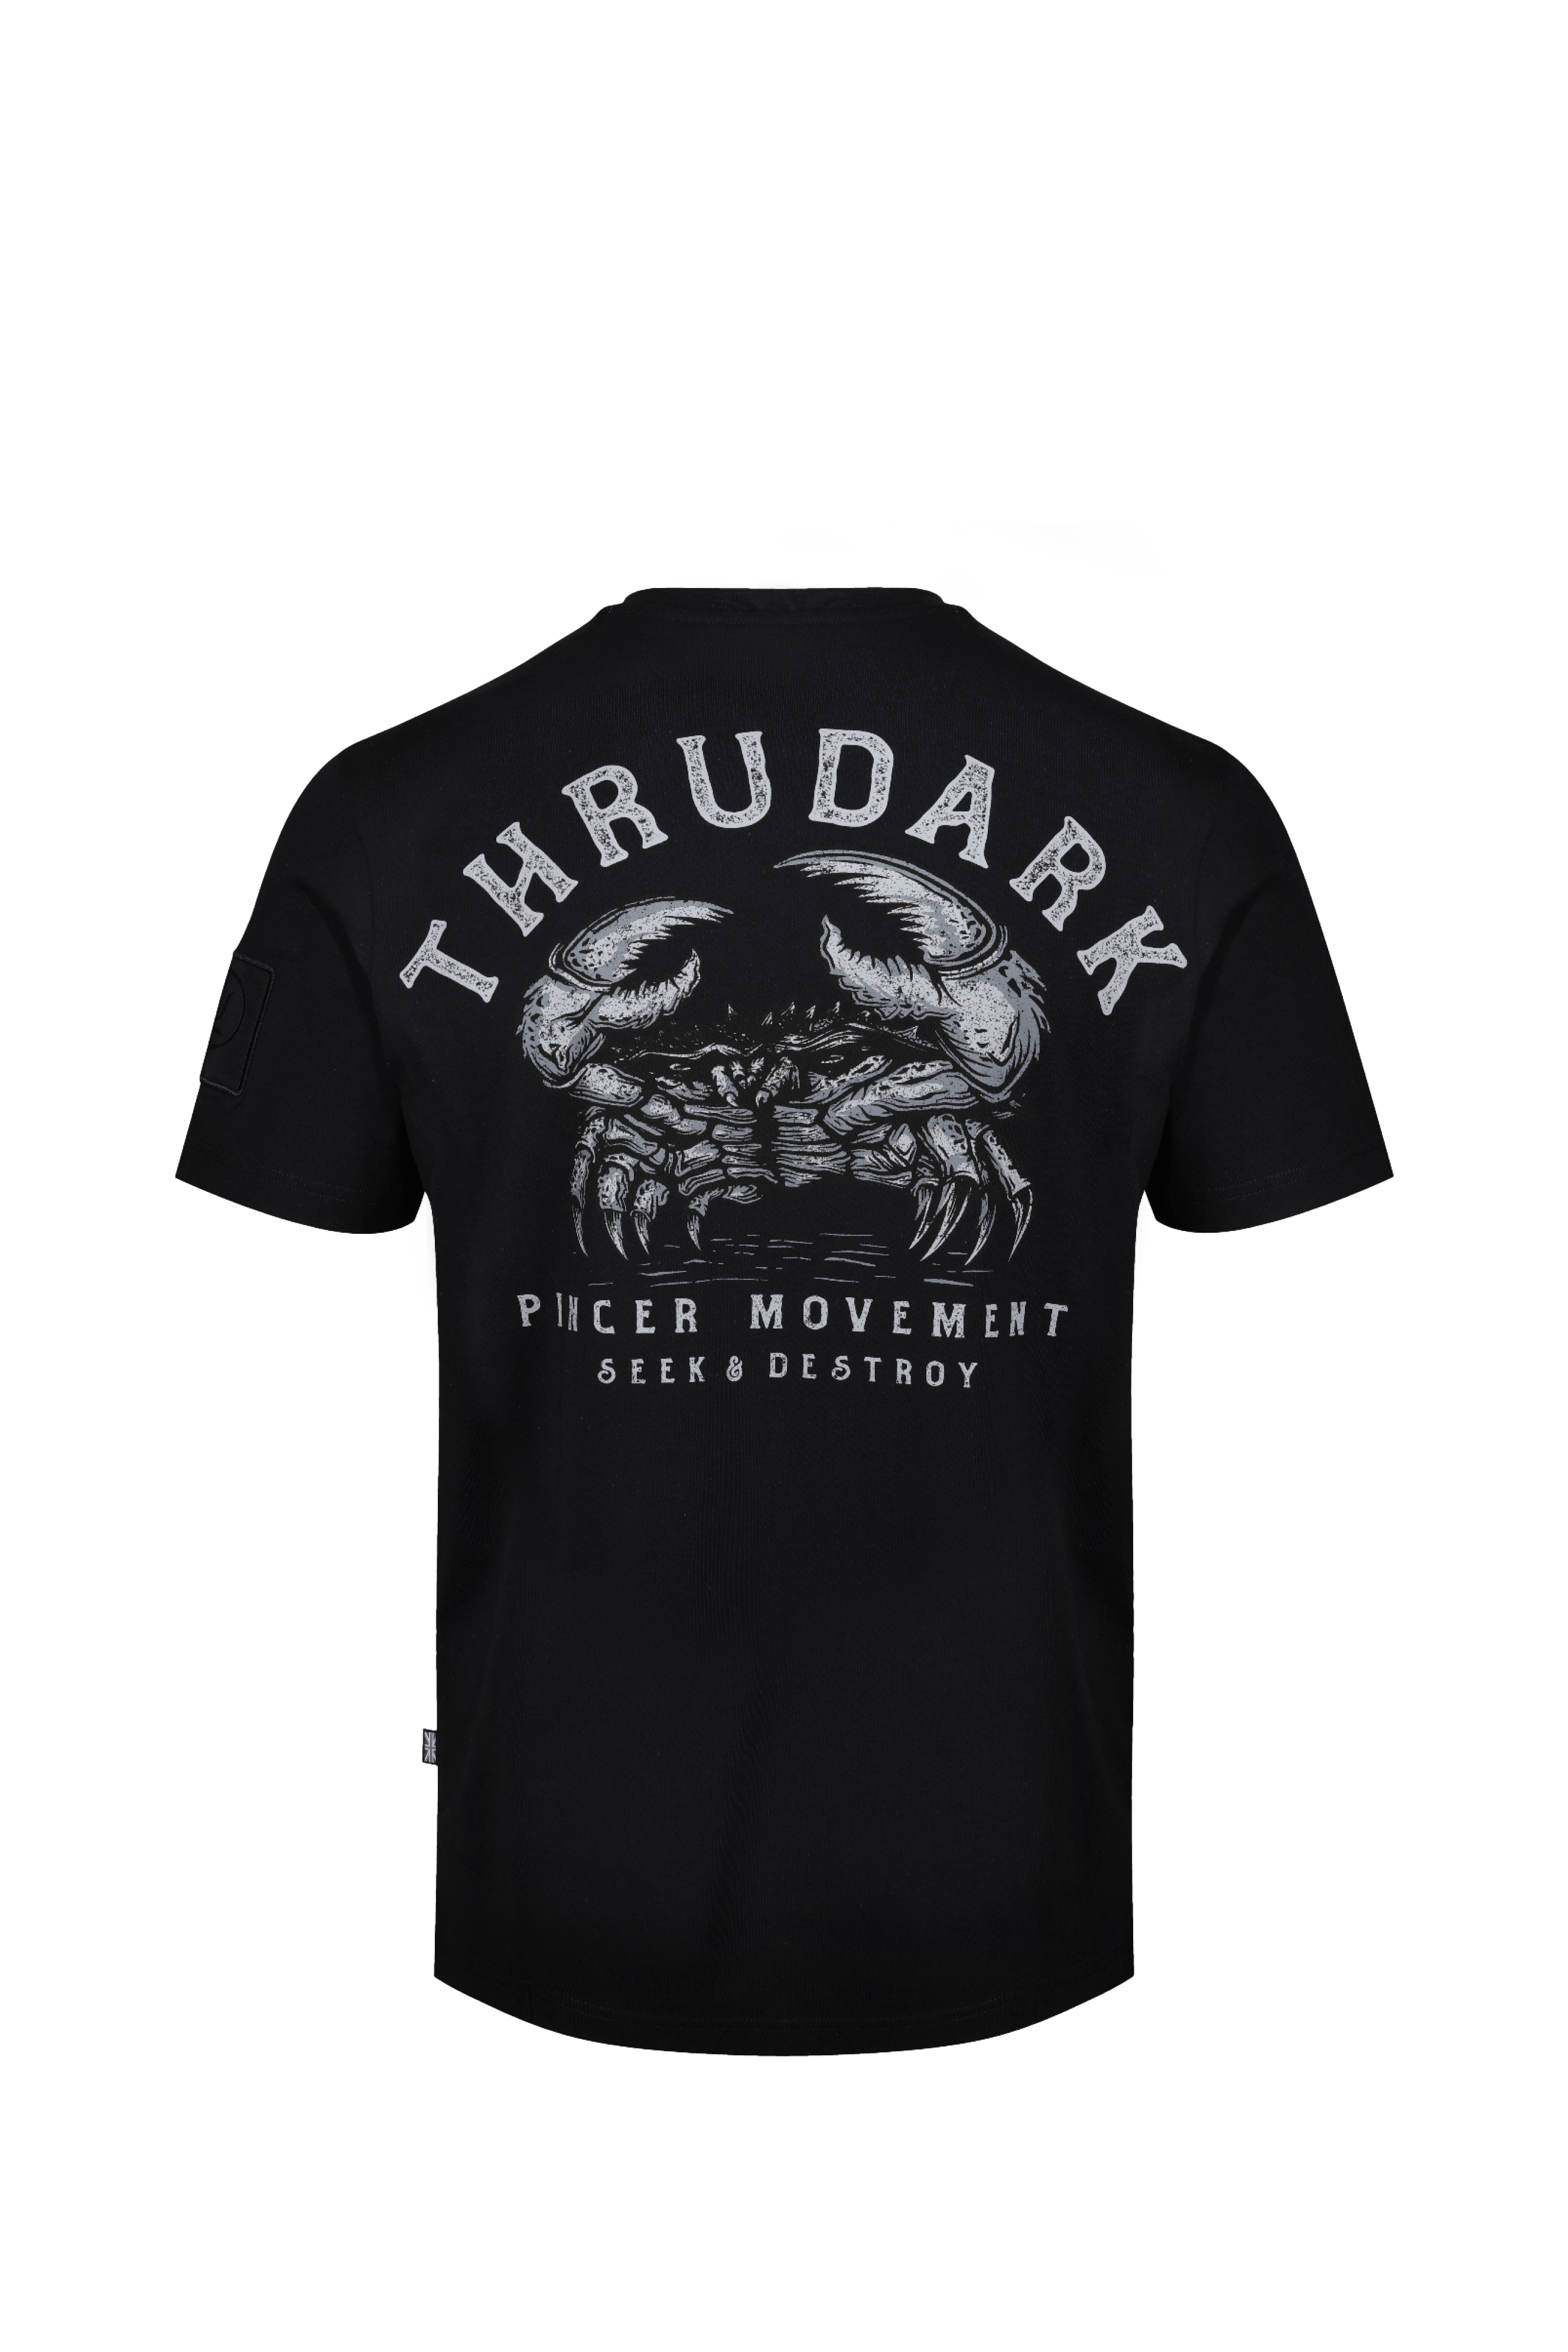 Thrudark  Insignia T-shirt - Pincer Movement 3xl